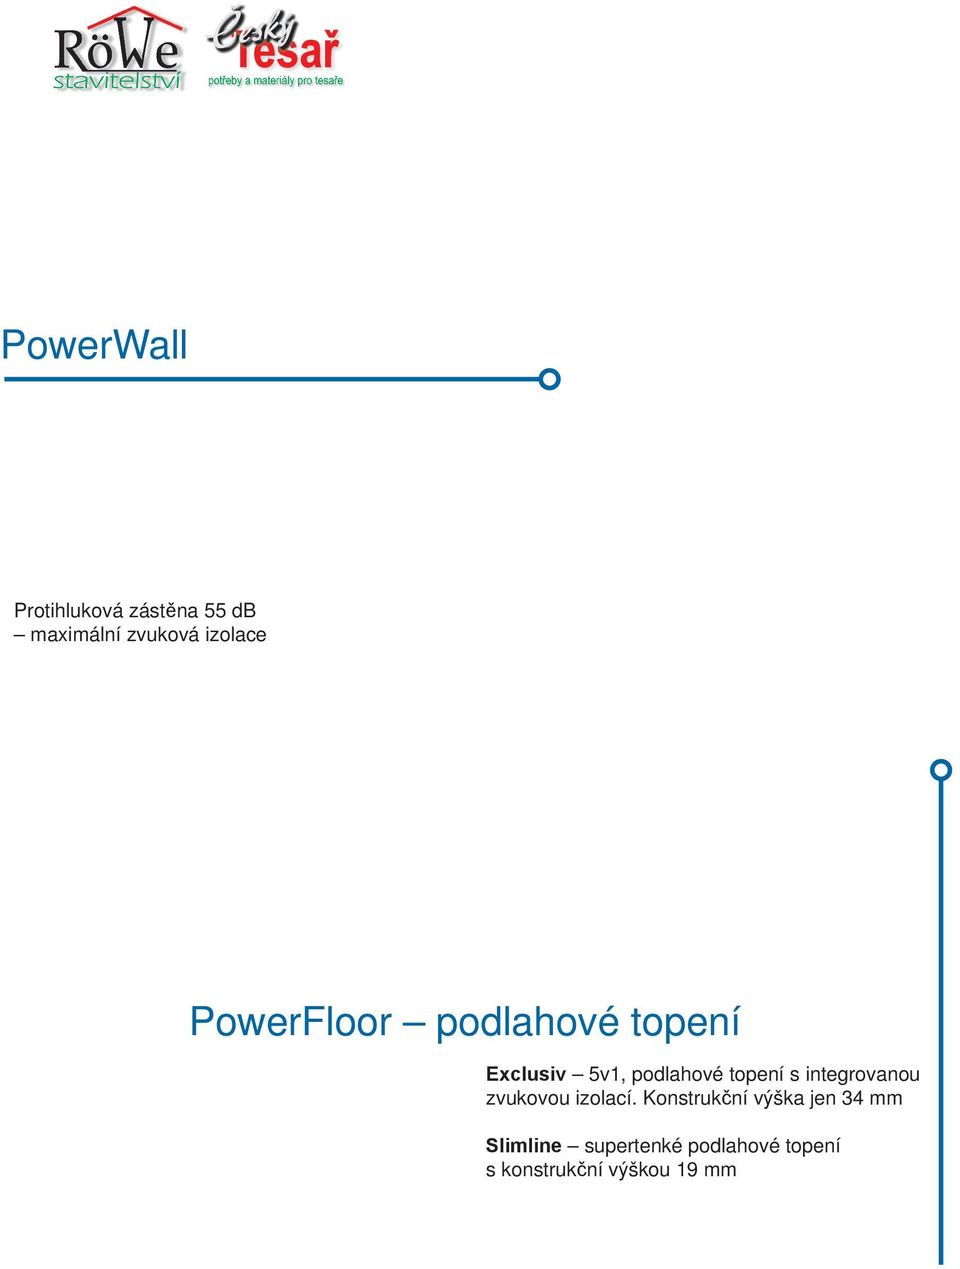 PowerWall Protihluková zástěna 55 db maximální zvuková izolace PowerFloor podlahové topení Exclusiv 5v1,